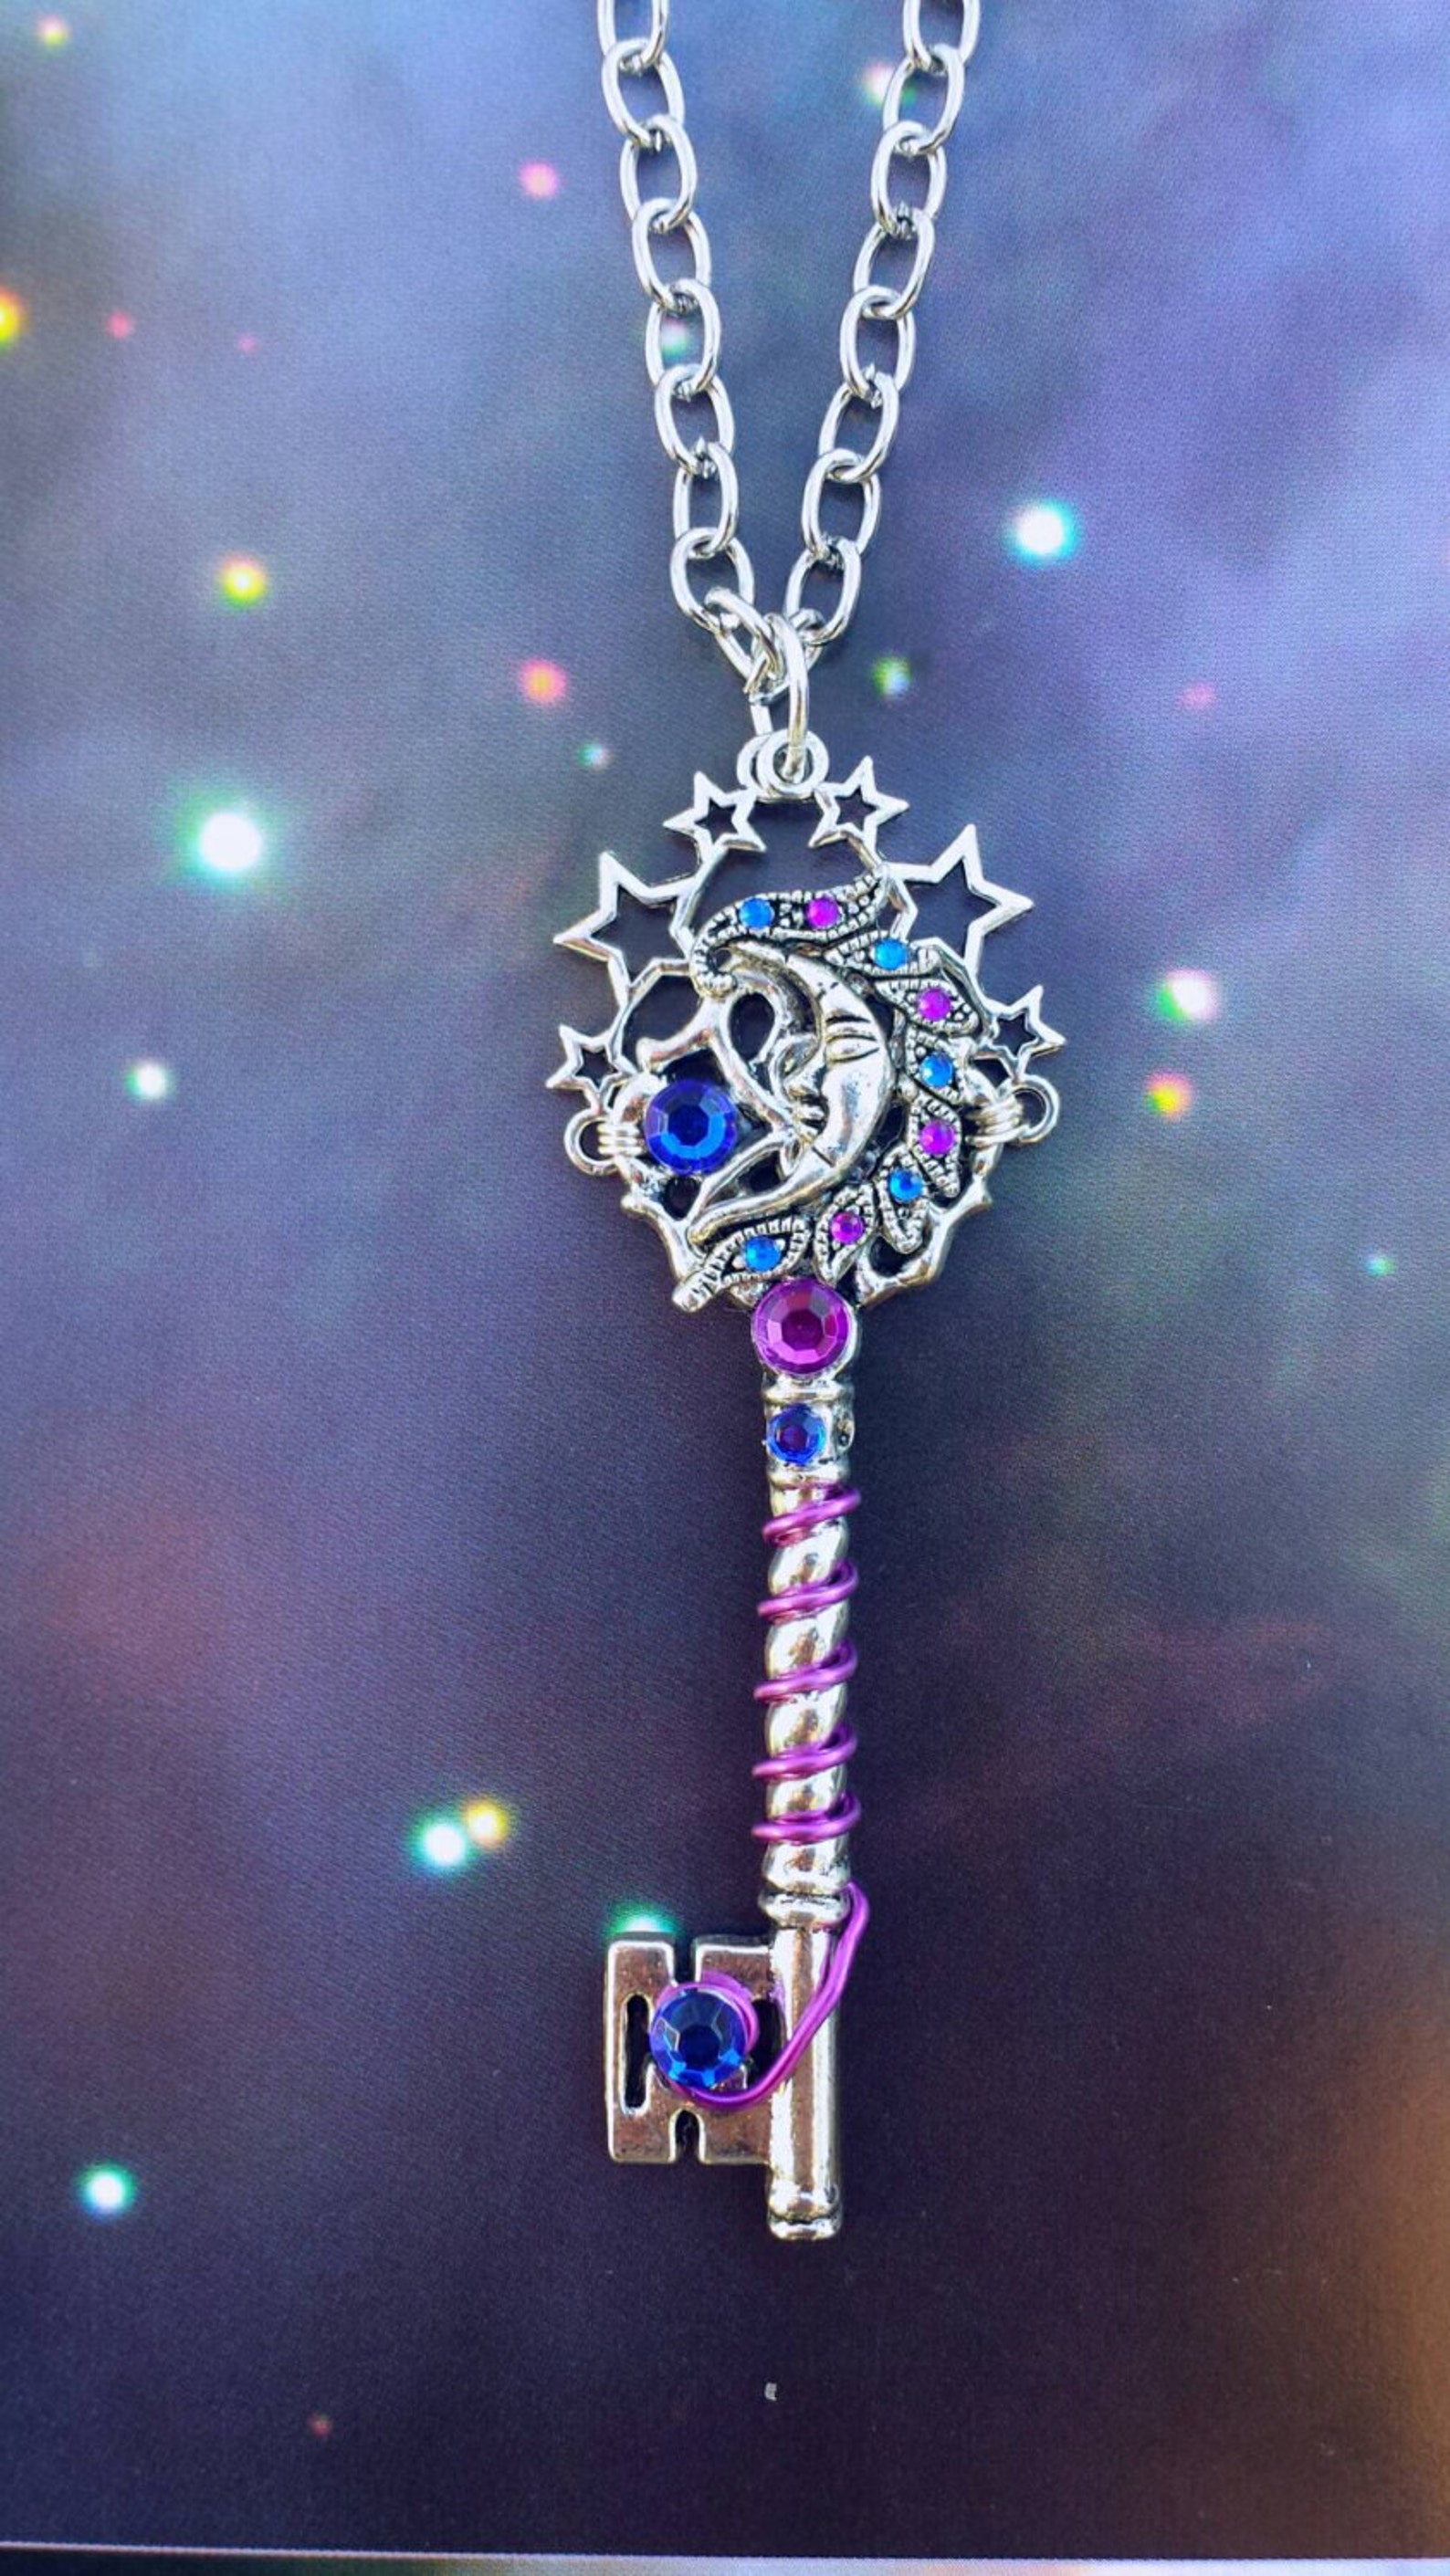 Moon key necklace star key necklace fantasy jewelry gothic | Etsy